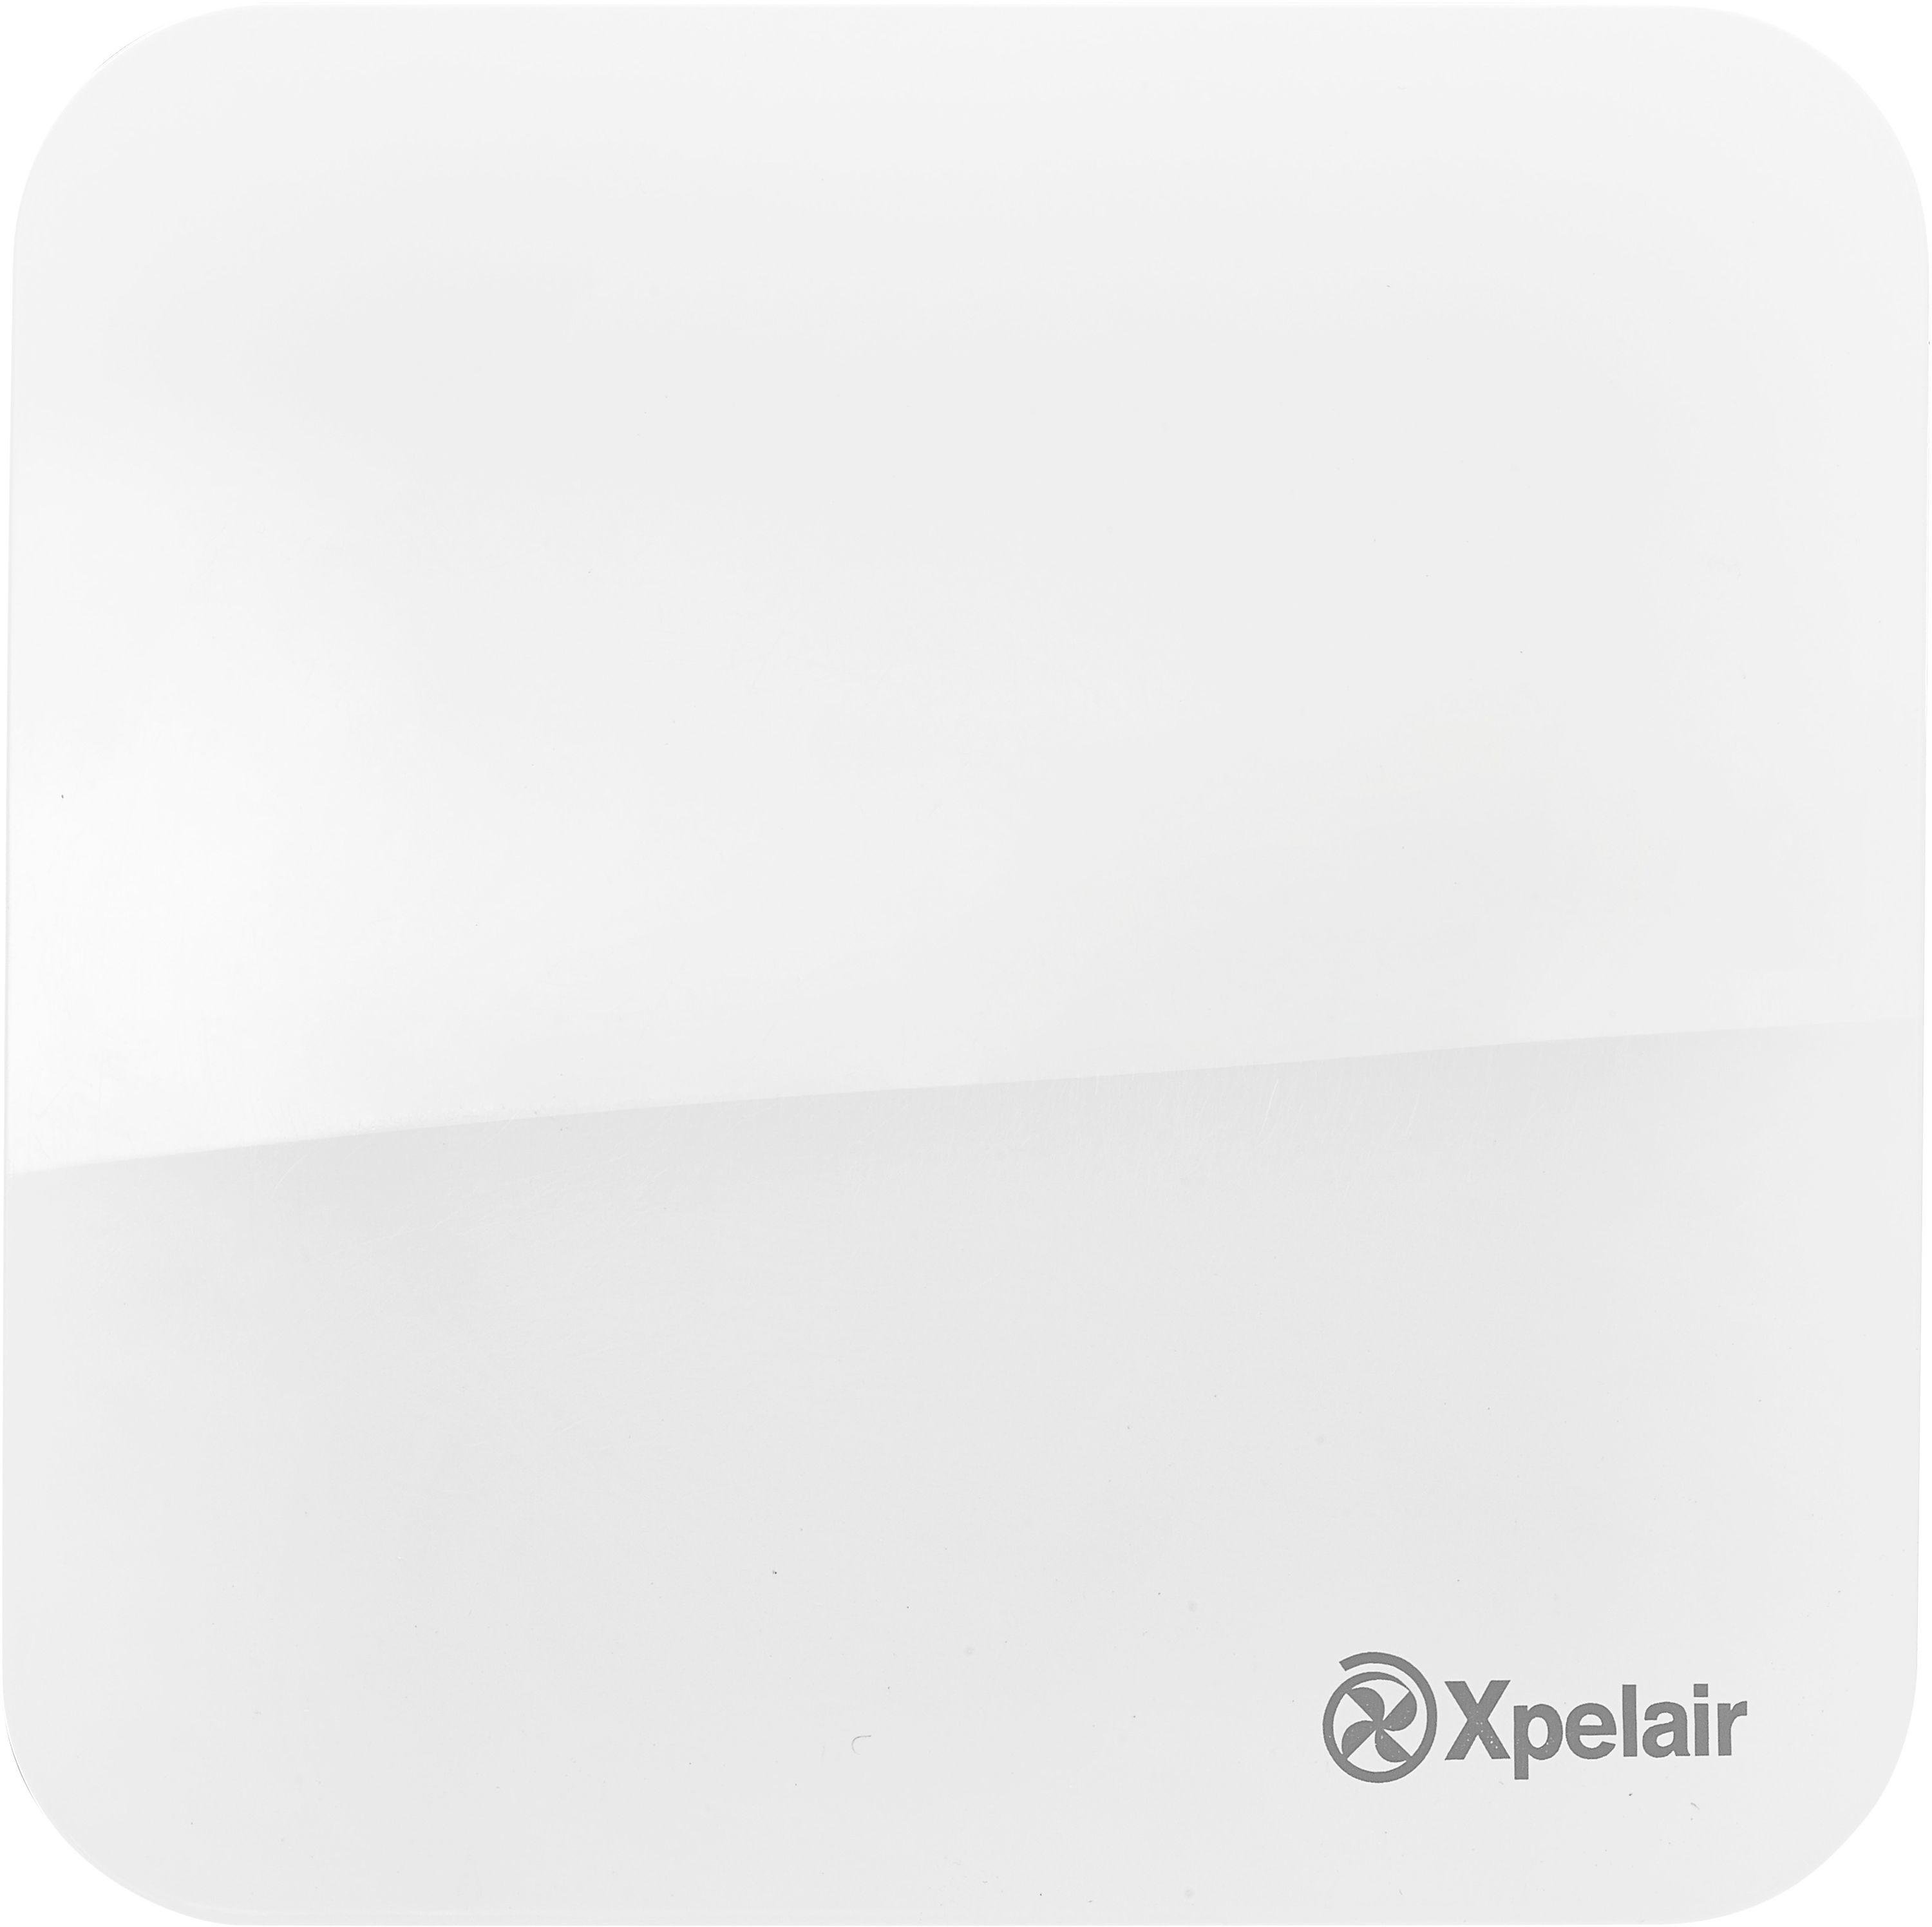 Xpelair 92960 Simply Silent Standard Contour Fan -  4 Inch